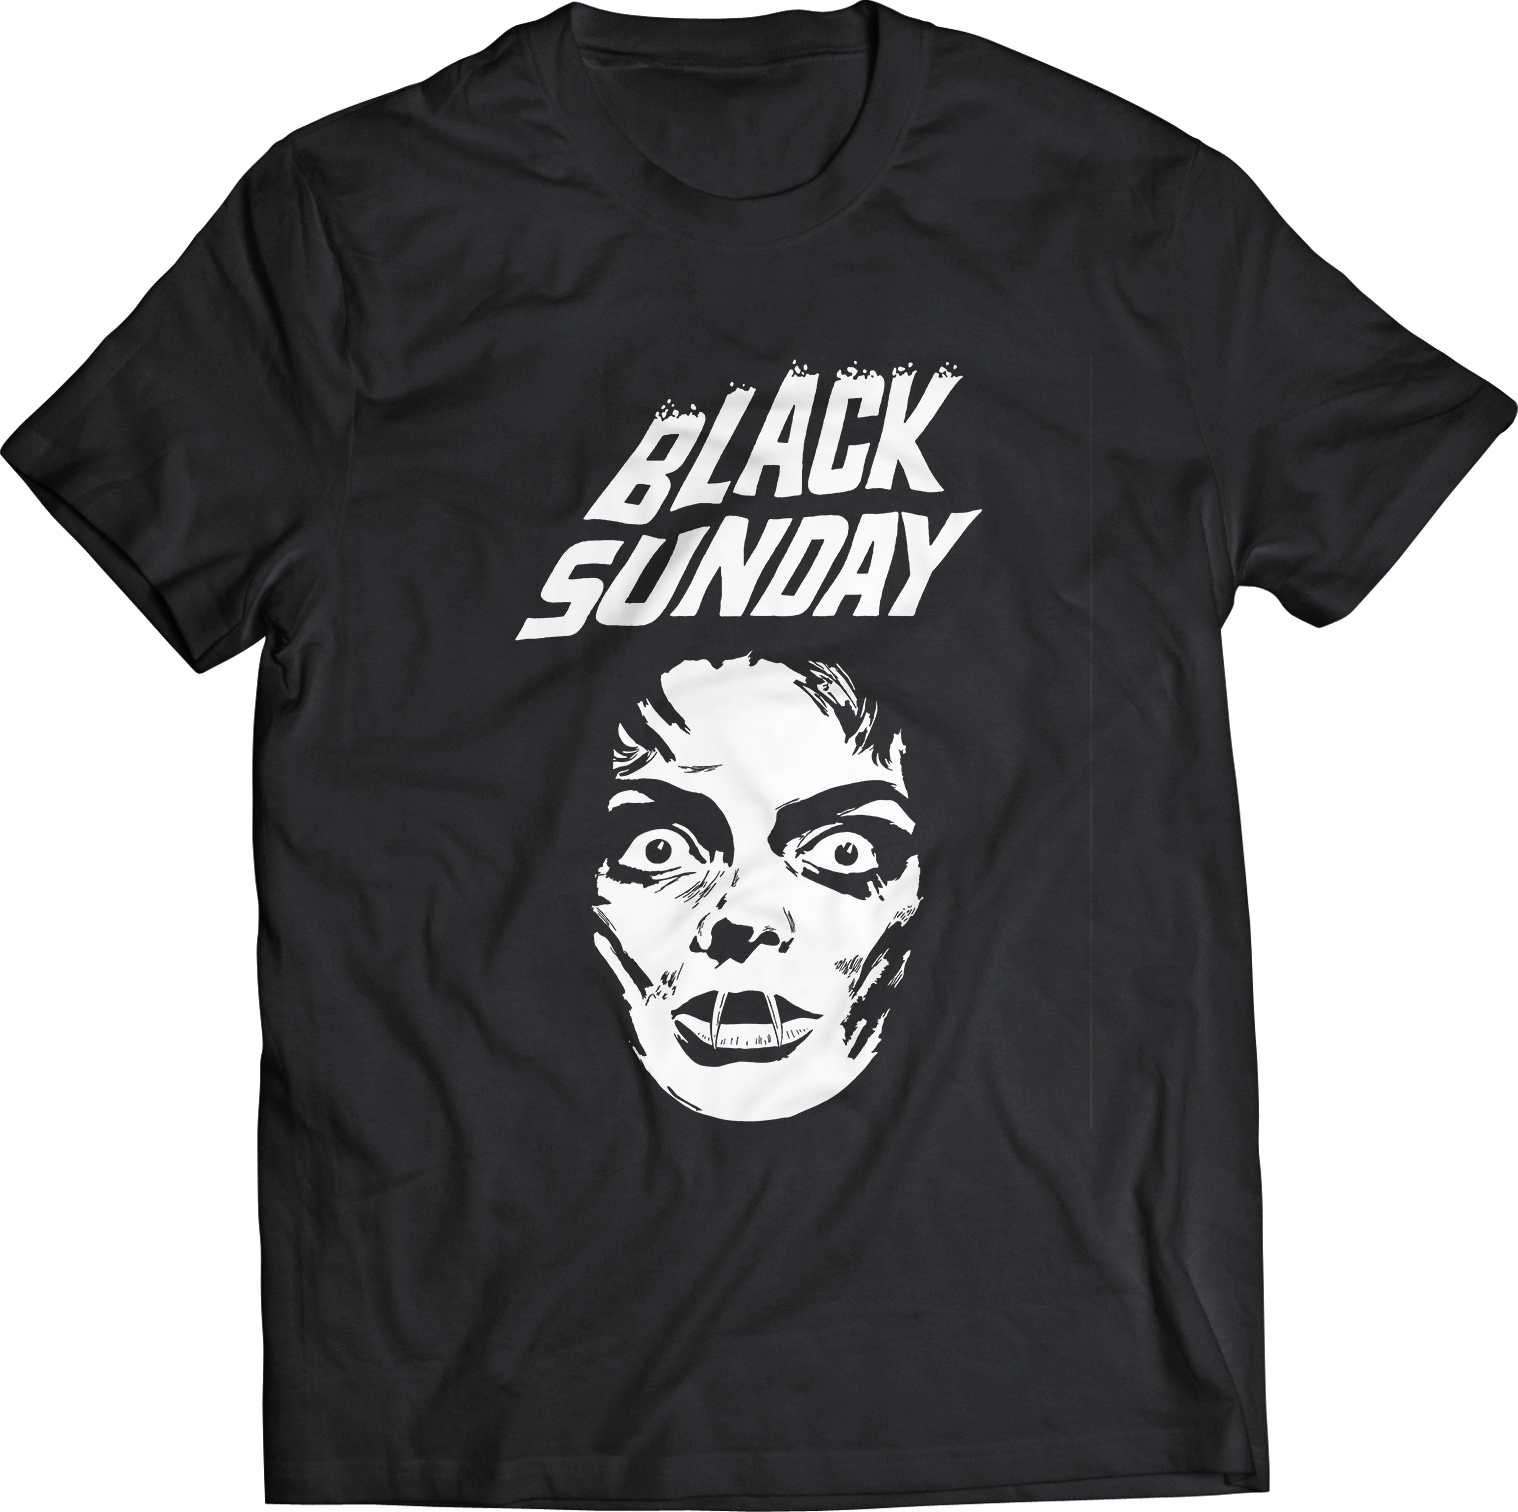 MARIO BAVA'S "BLACK SUNDAY" FACE T-SHIRT